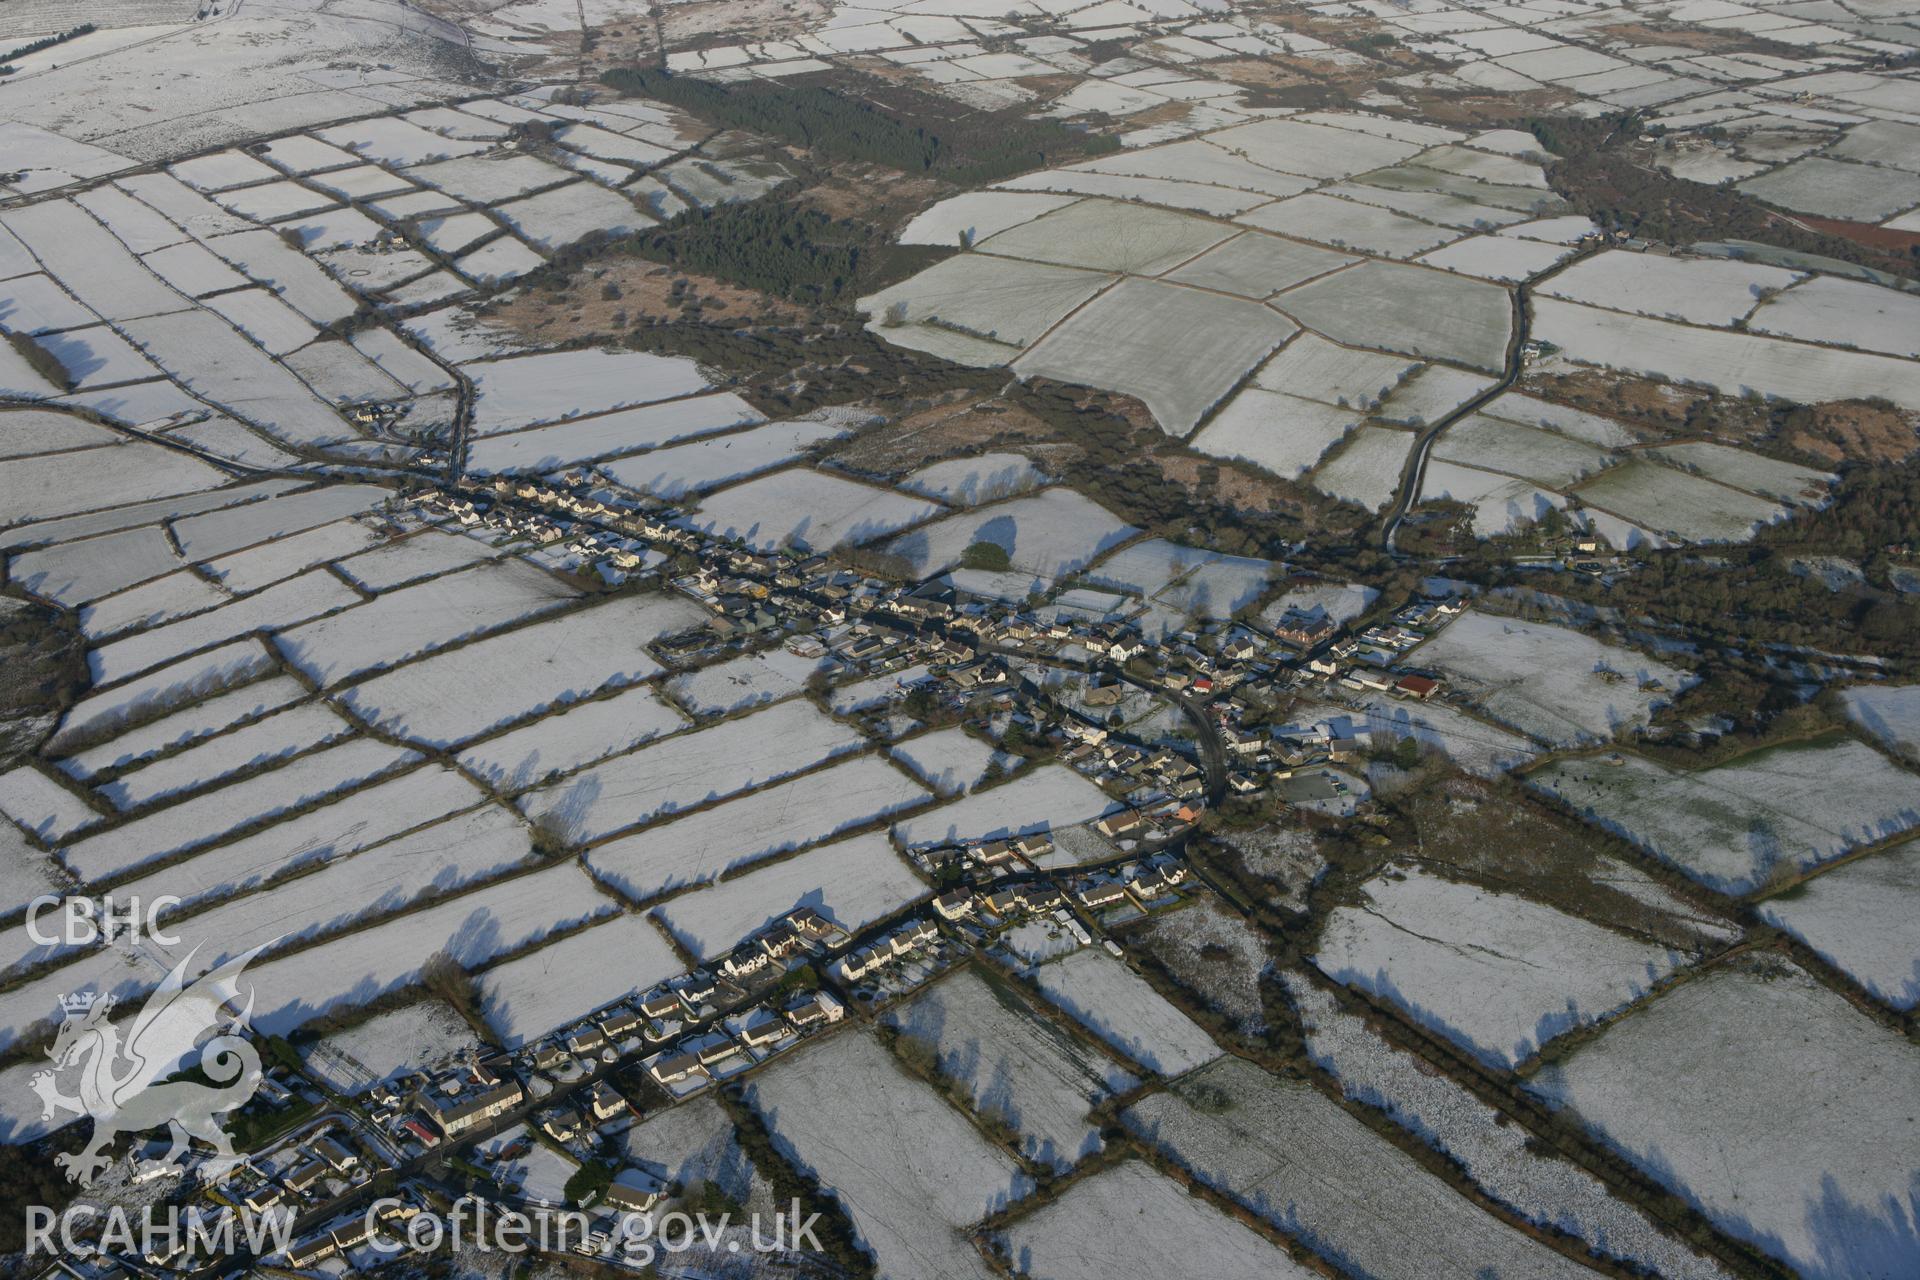 RCAHMW colour oblique photograph of Maenclochog village. Taken by Toby Driver on 01/12/2010.